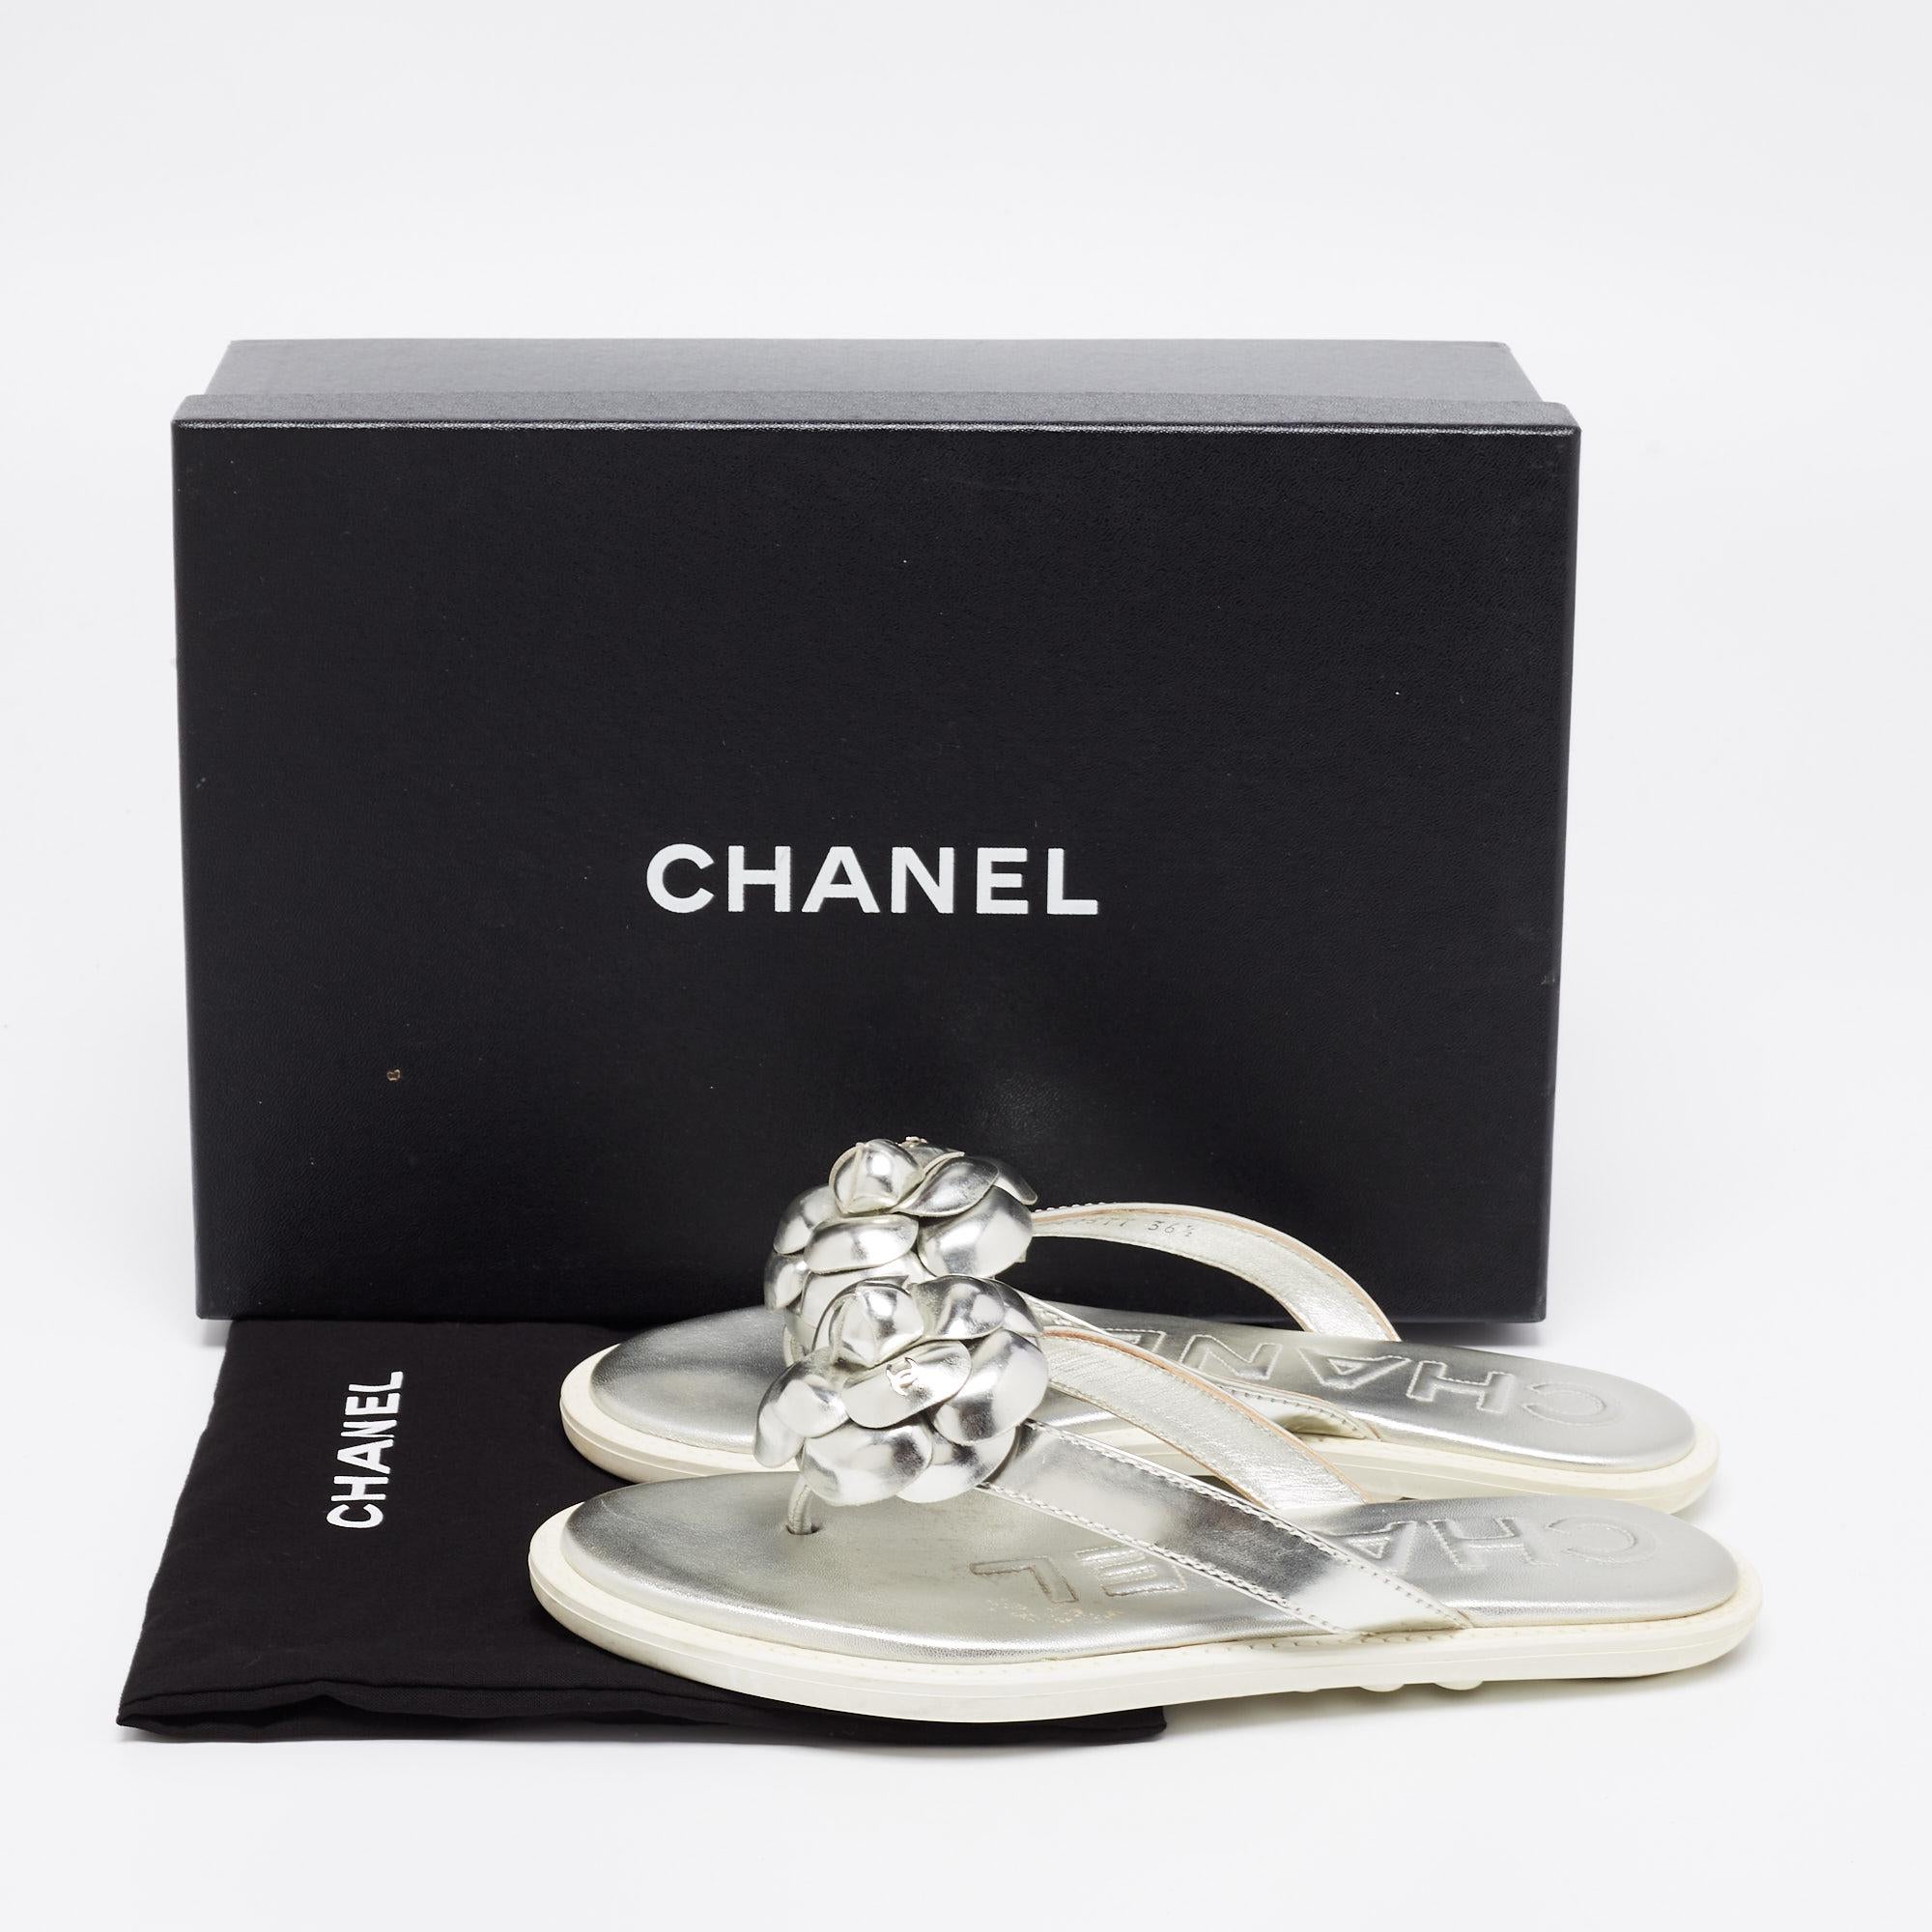 Chanel Leather CC Camellia Flat Flip Flop Thong Sandals Size 36.5 4